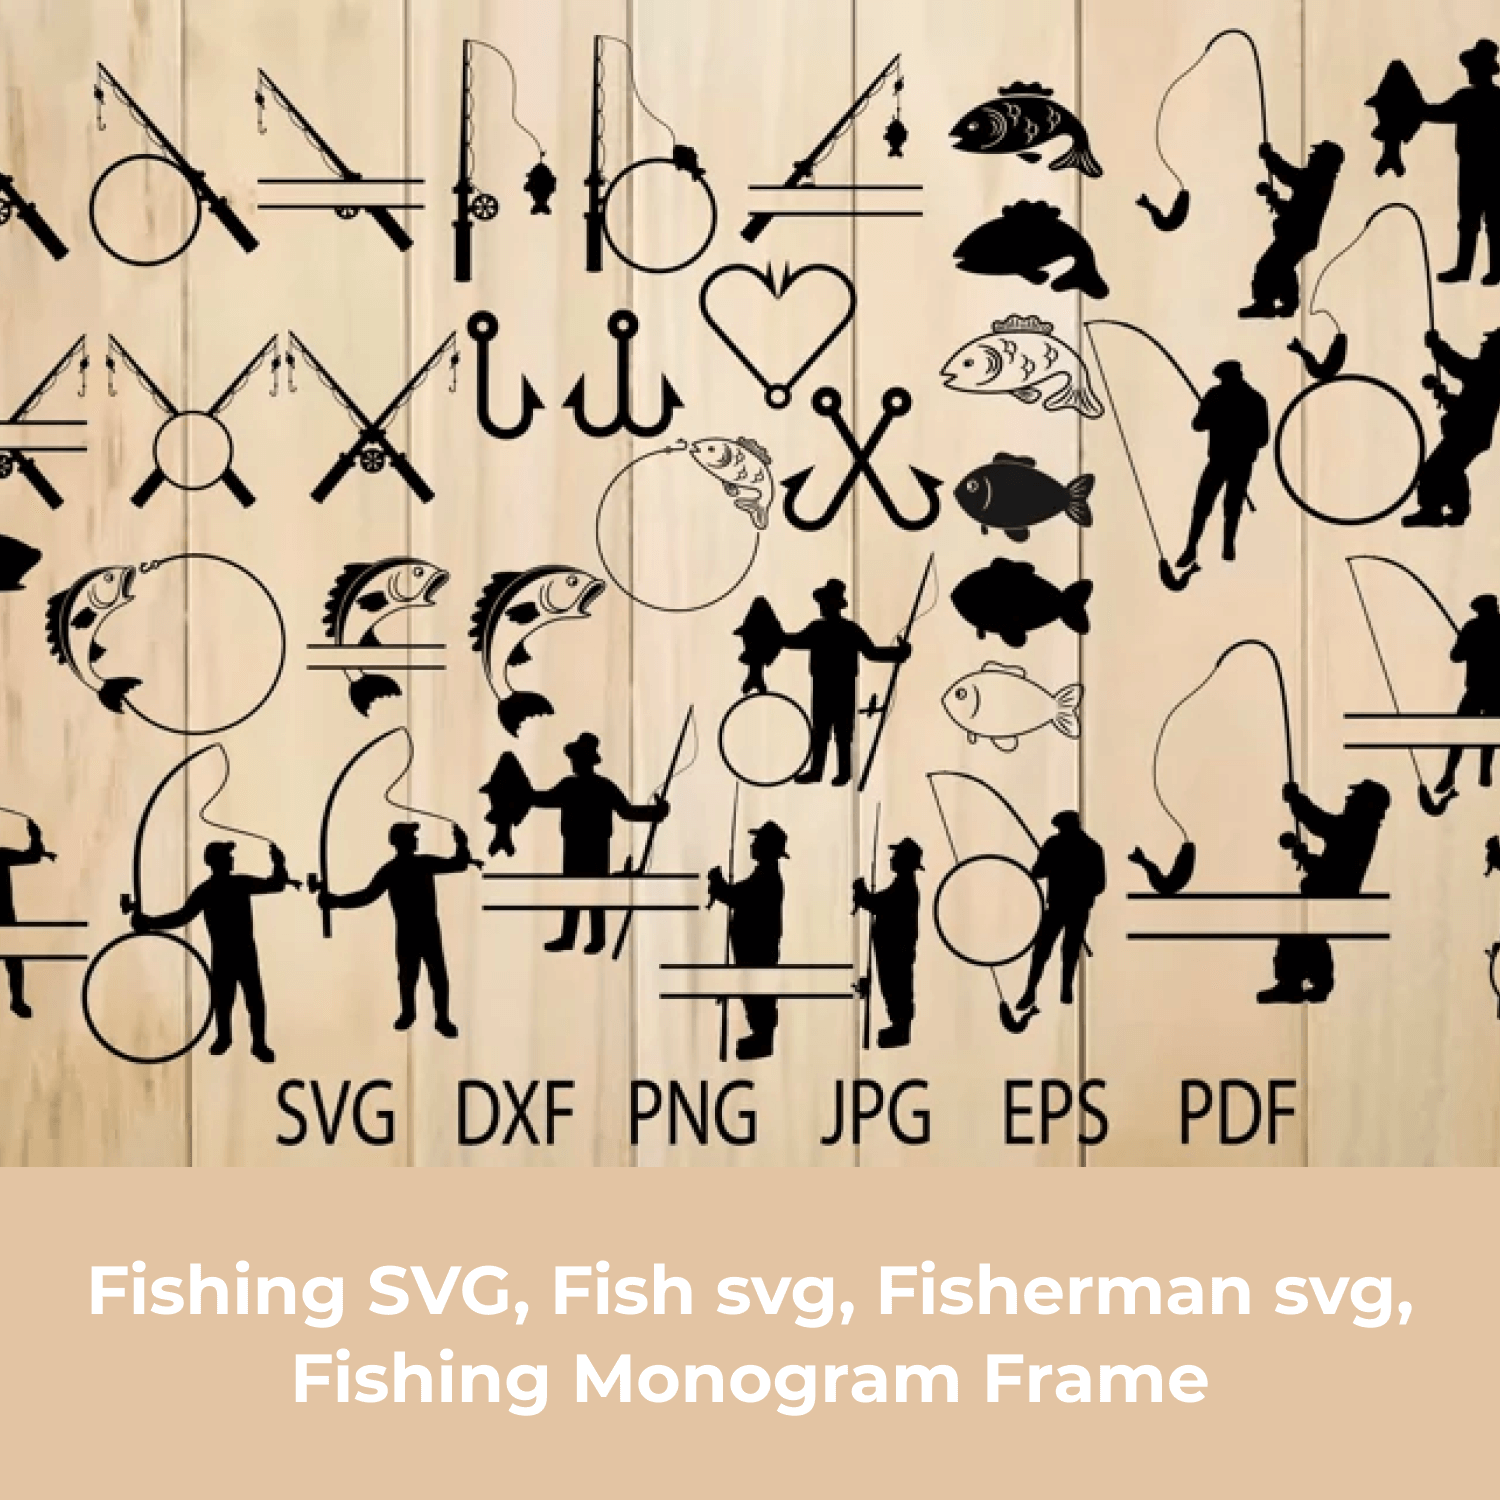 Svg fishing monogram frame.